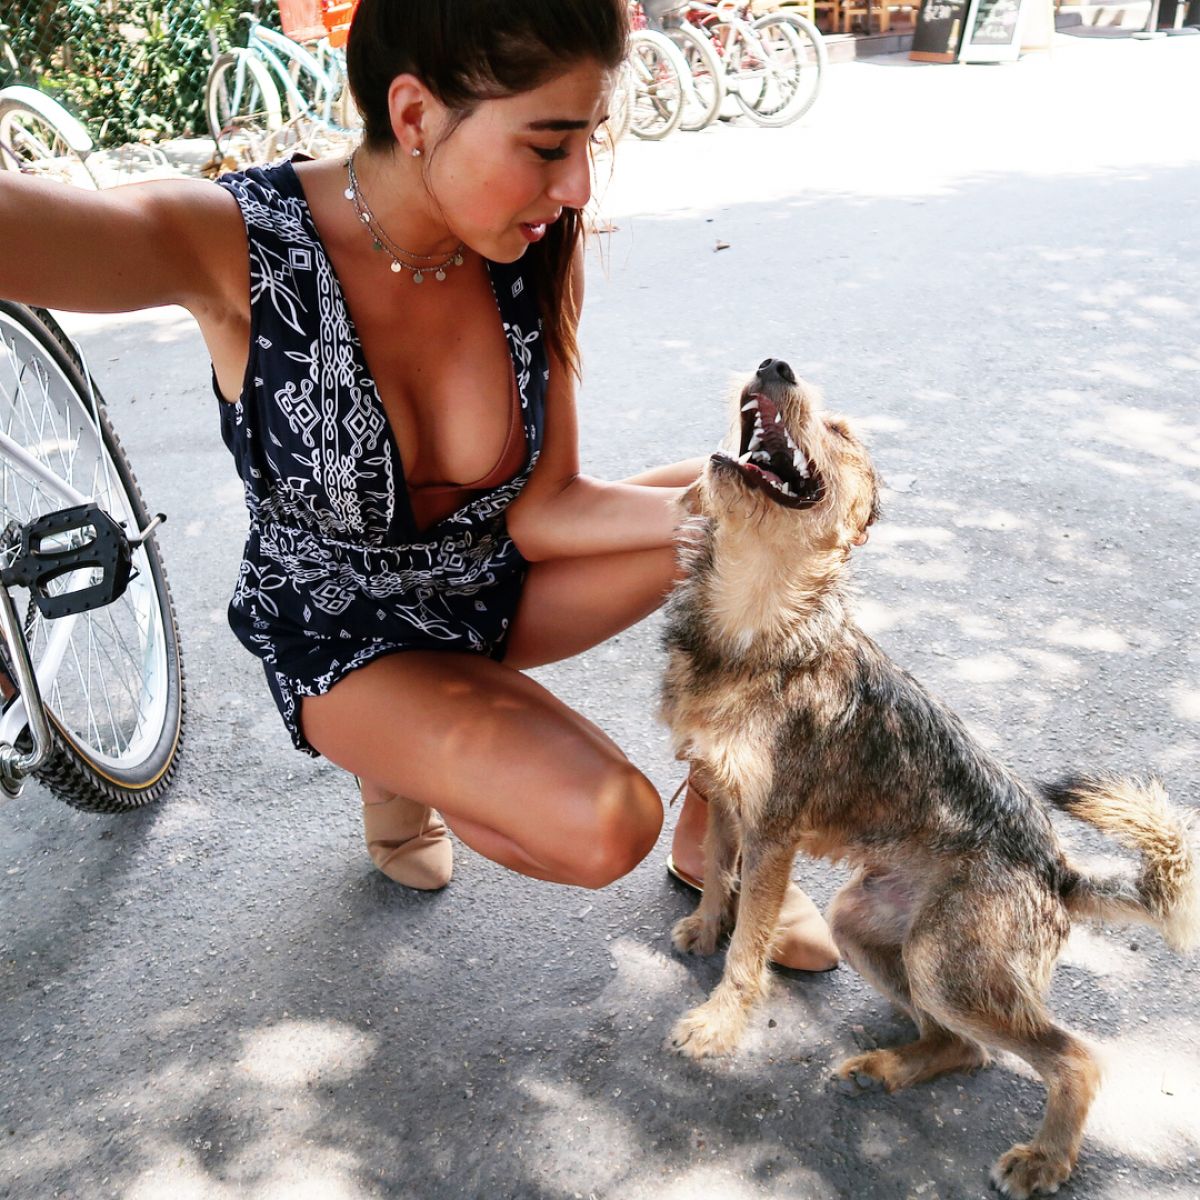 DANIELLA MONET witha Dog, 07/15/2016 Instagram Pictures.